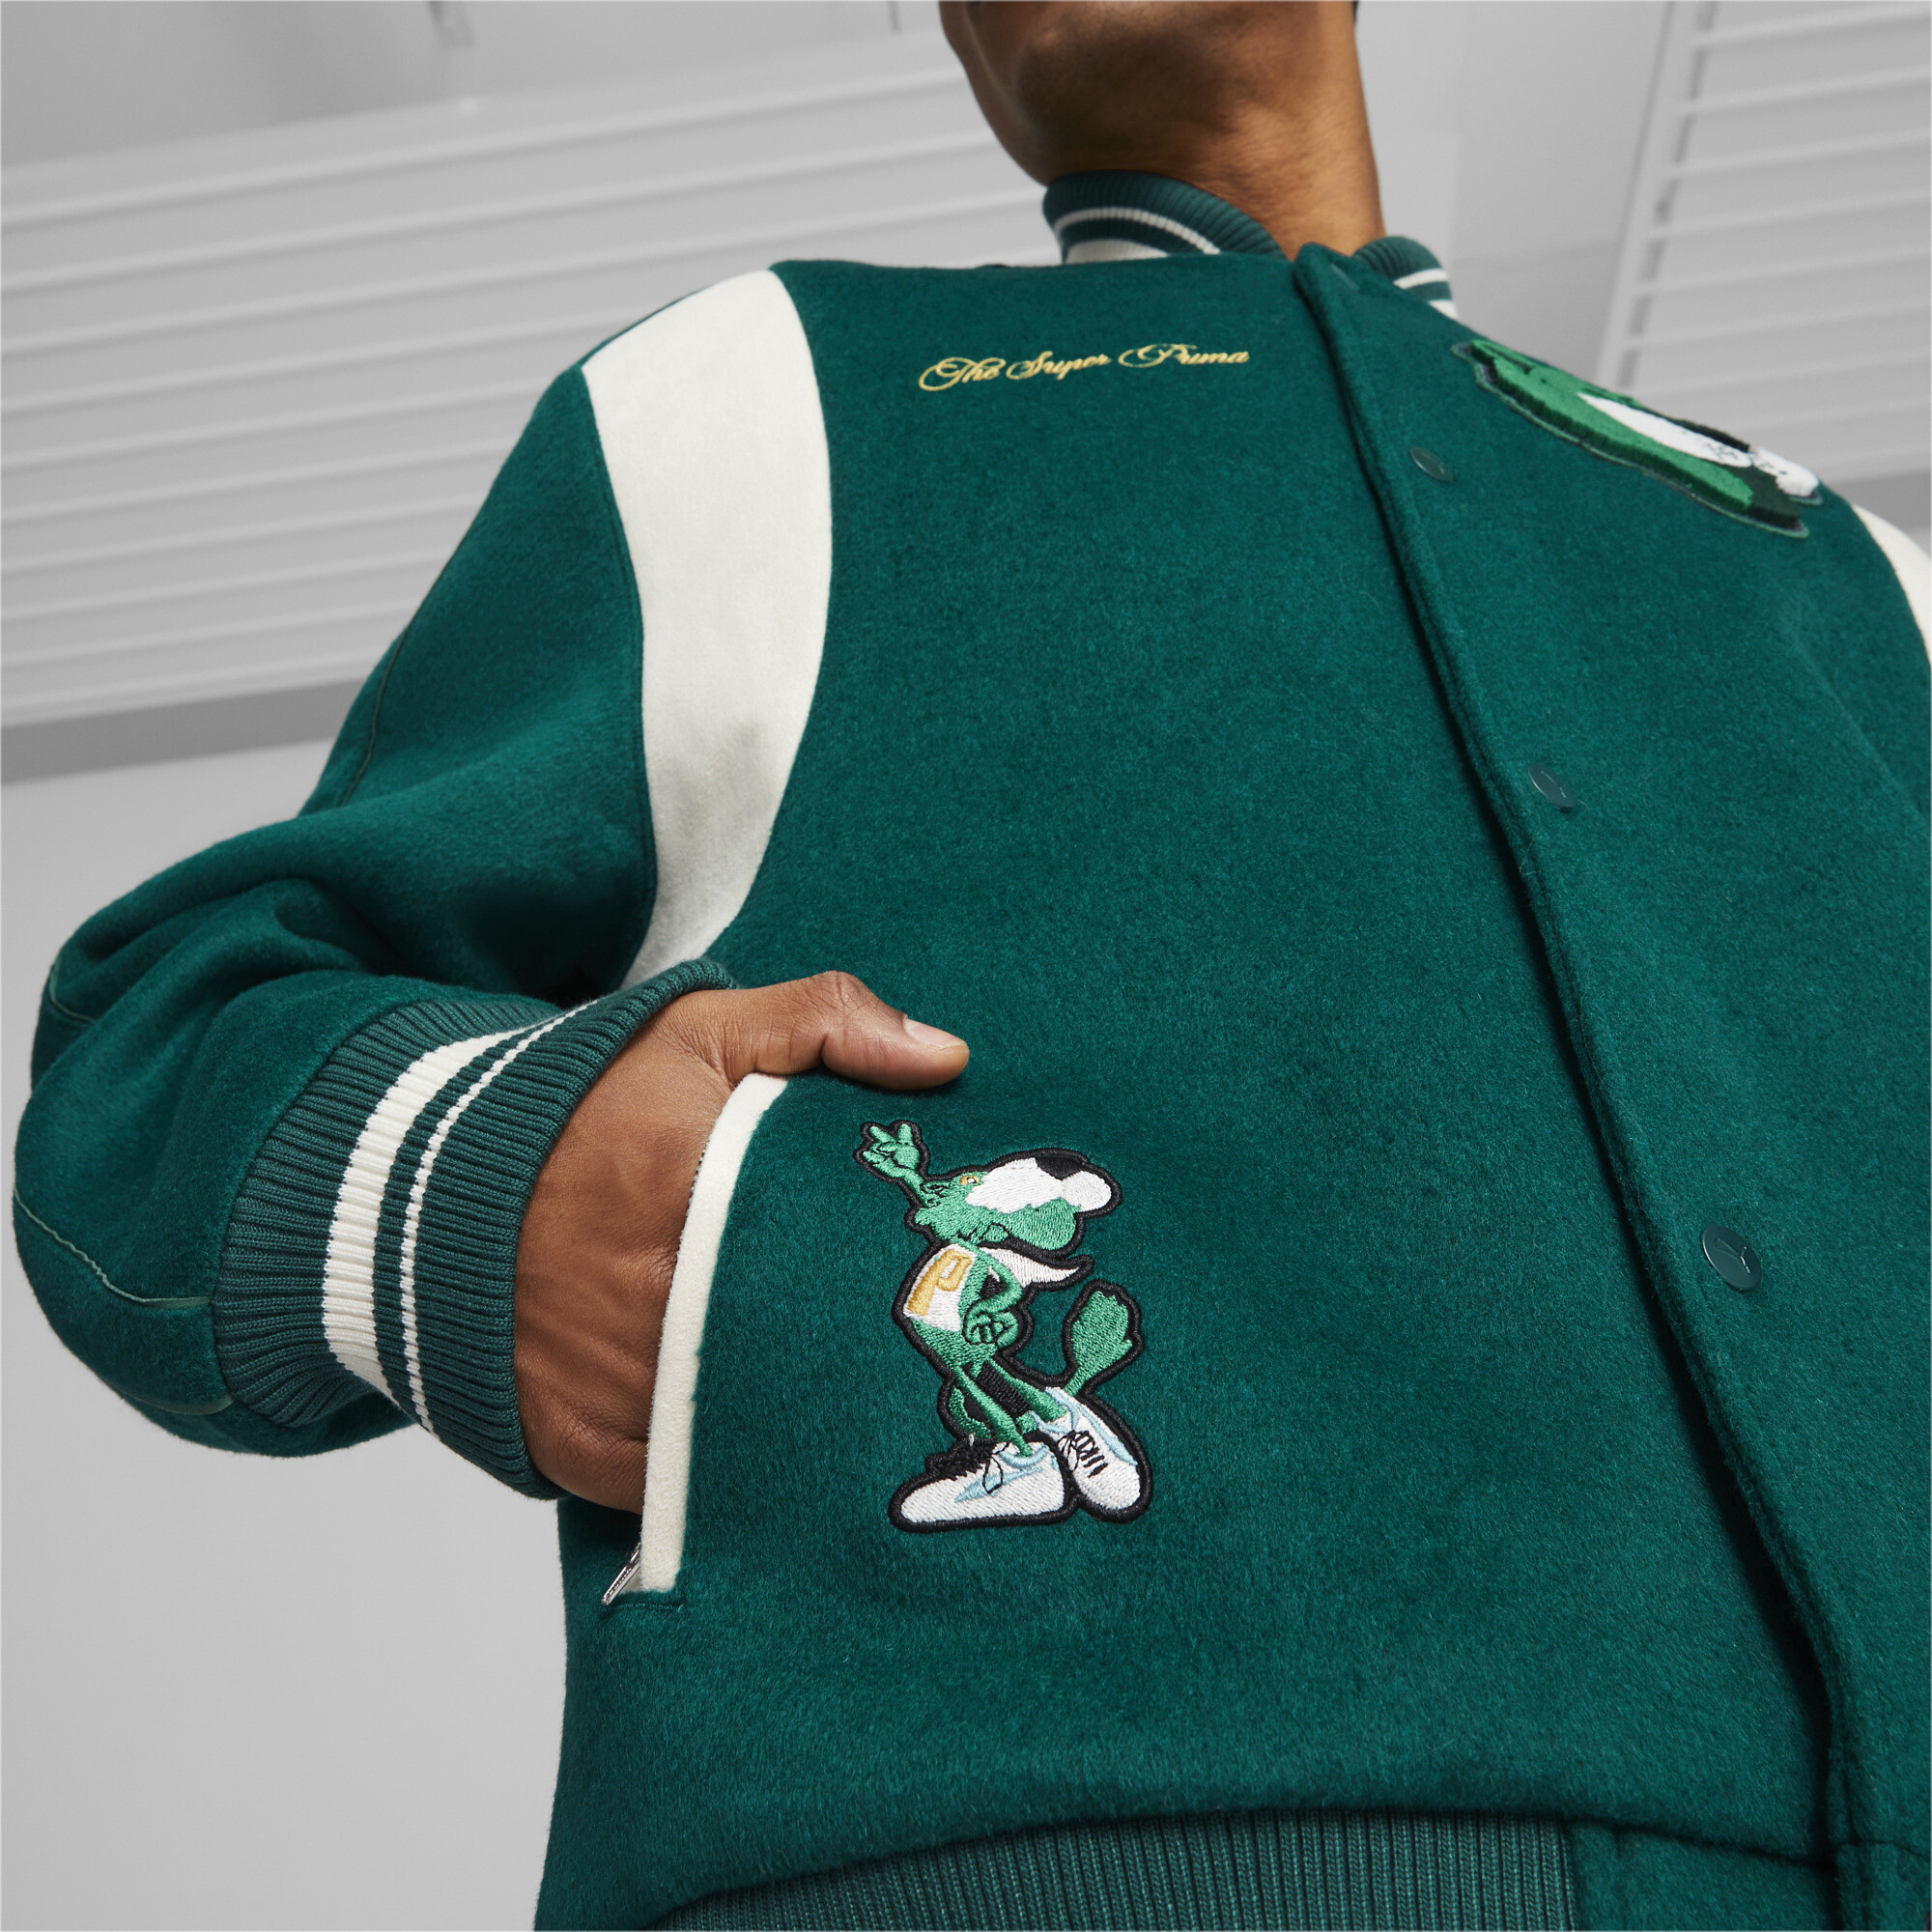 Men's PUMA The Mascot T7 College Jacket Men In Green, Size Small